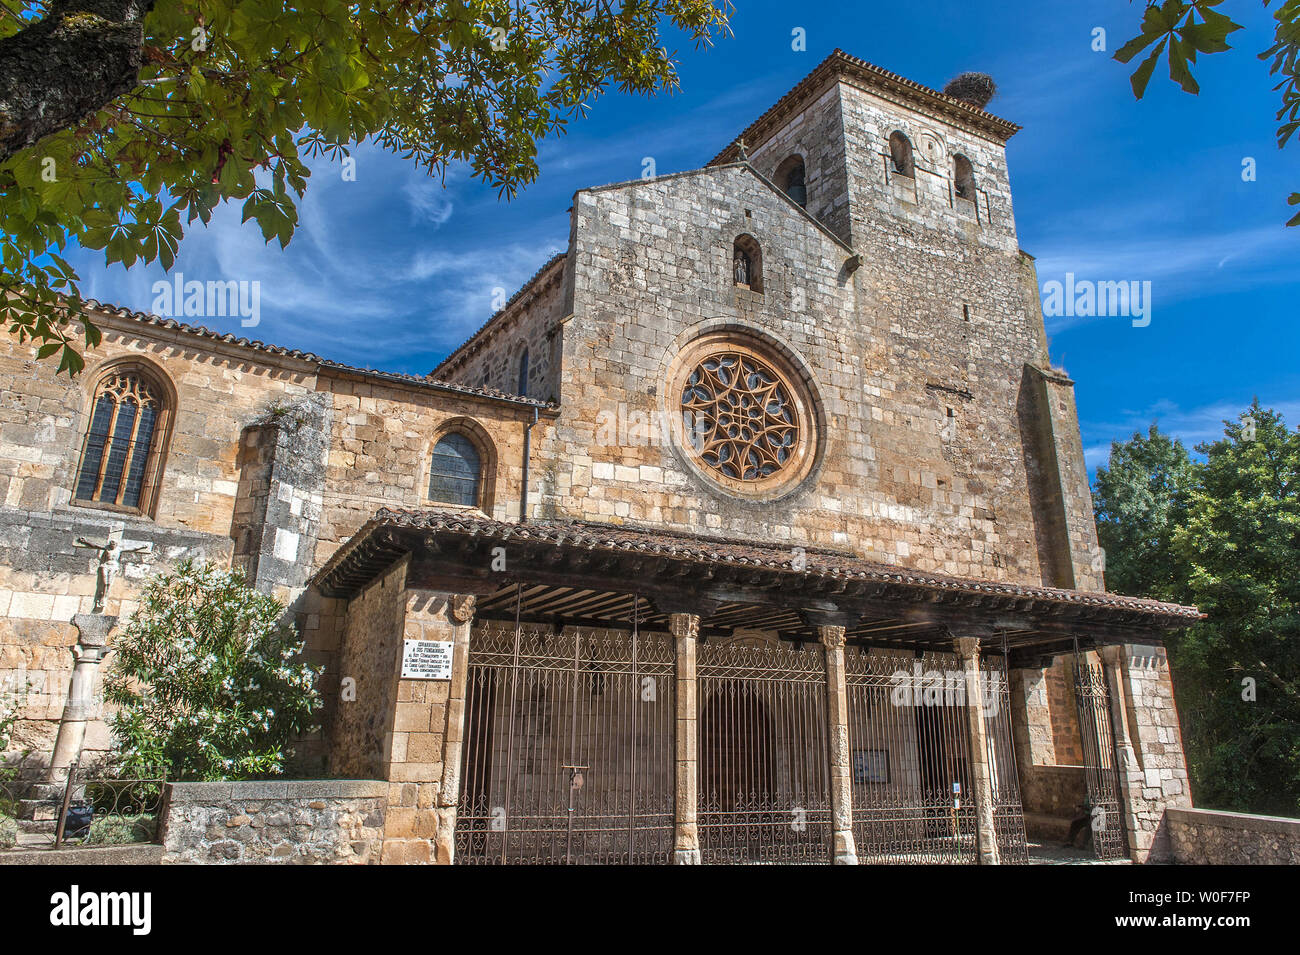 Spain, Autonomous community of Castile and Leon, province of Burgos, historical village of Covarrubias, Saint Cosme and Saint Damian collegiate church (Saint James way) Stock Photo